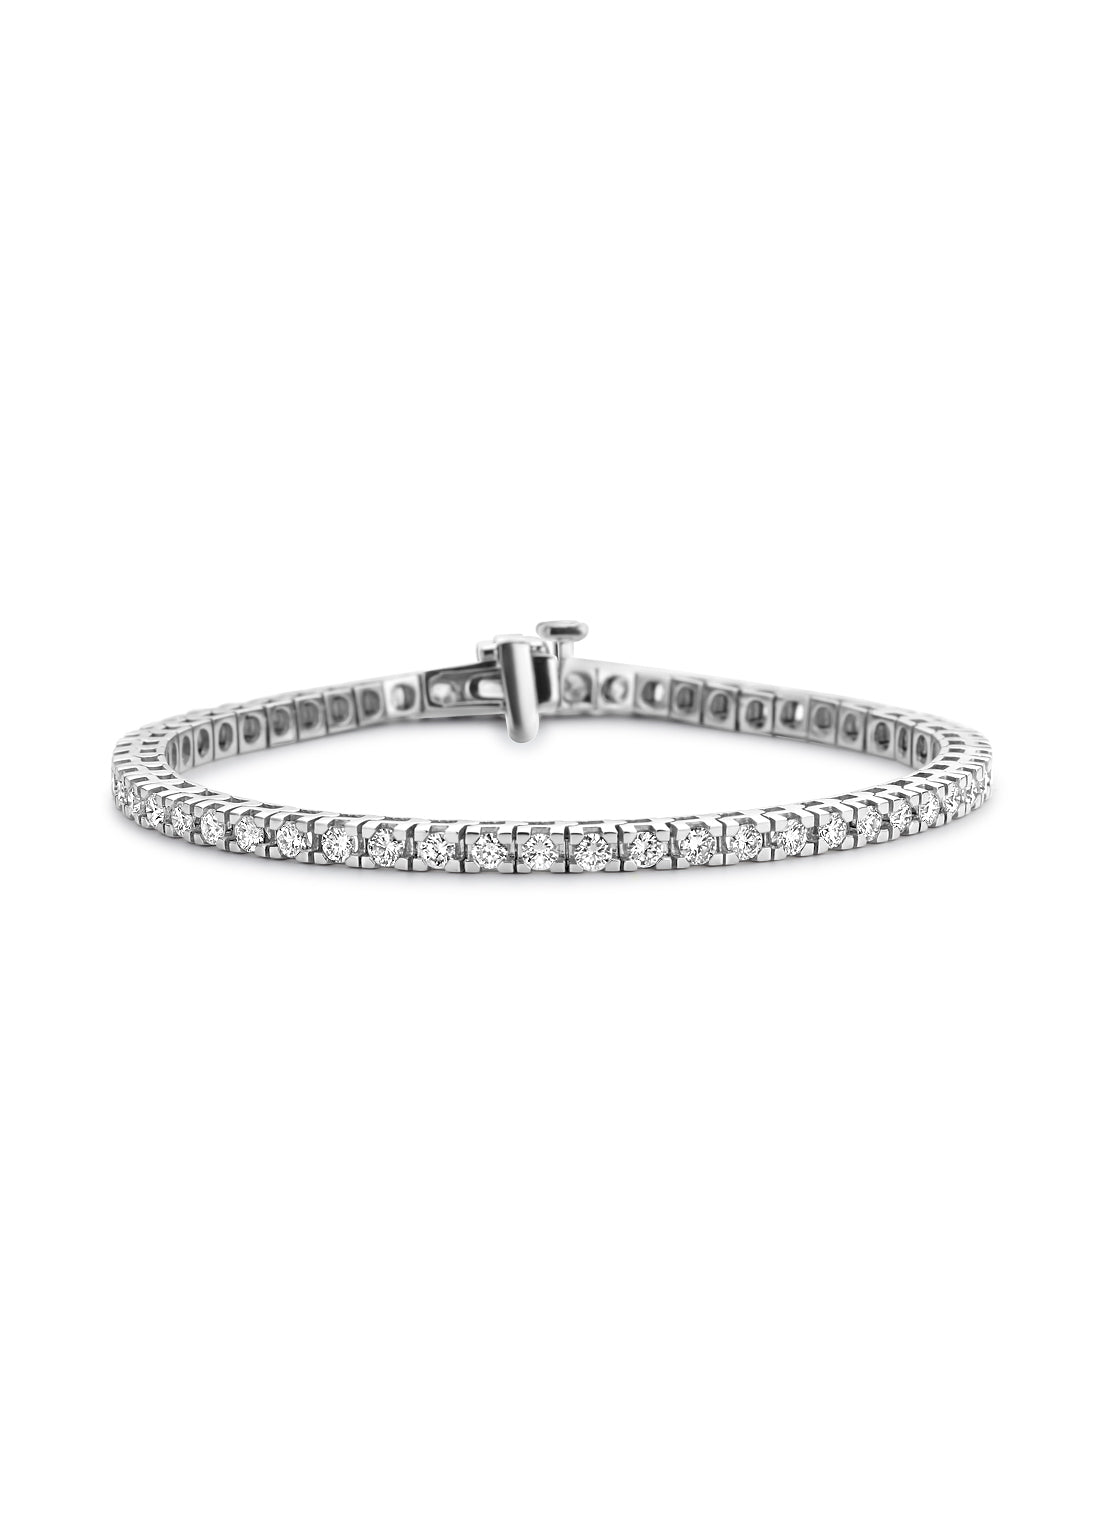 Tennis bracelet, 3.00 ct diamond